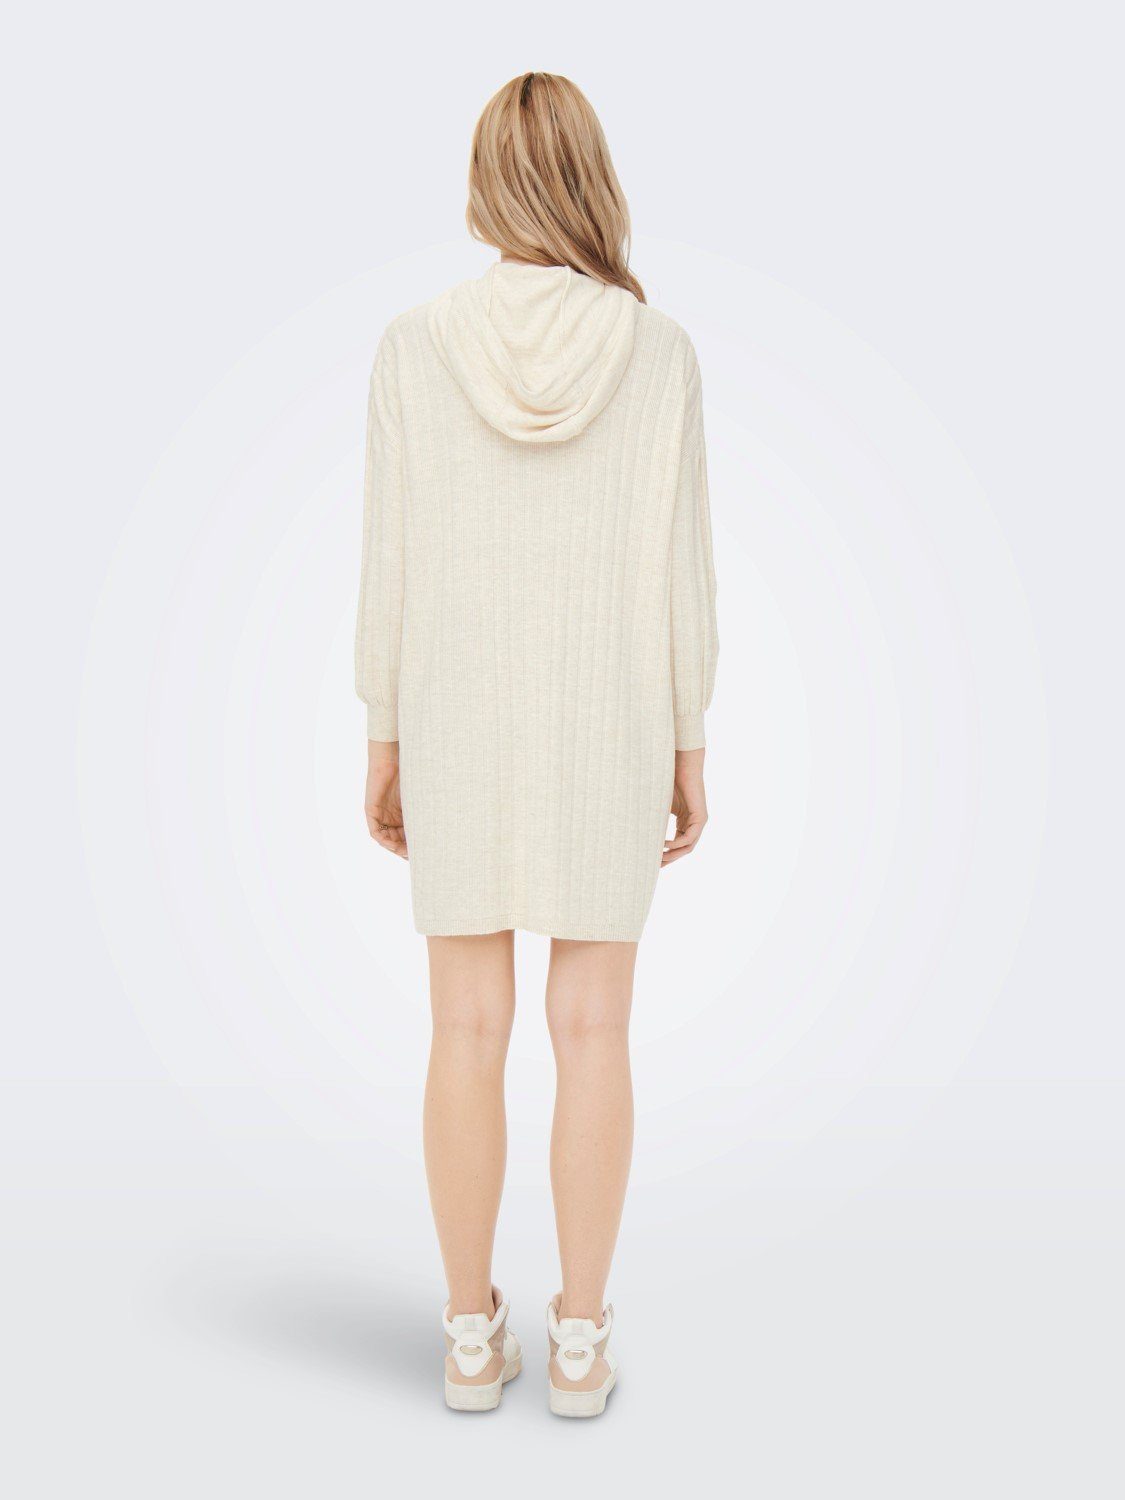 Beige (20) offwhite ONLTESSA 6157 in Dress Mini Hoodie ONLY Shirtkleid (lang) Kleid Strick Pullover